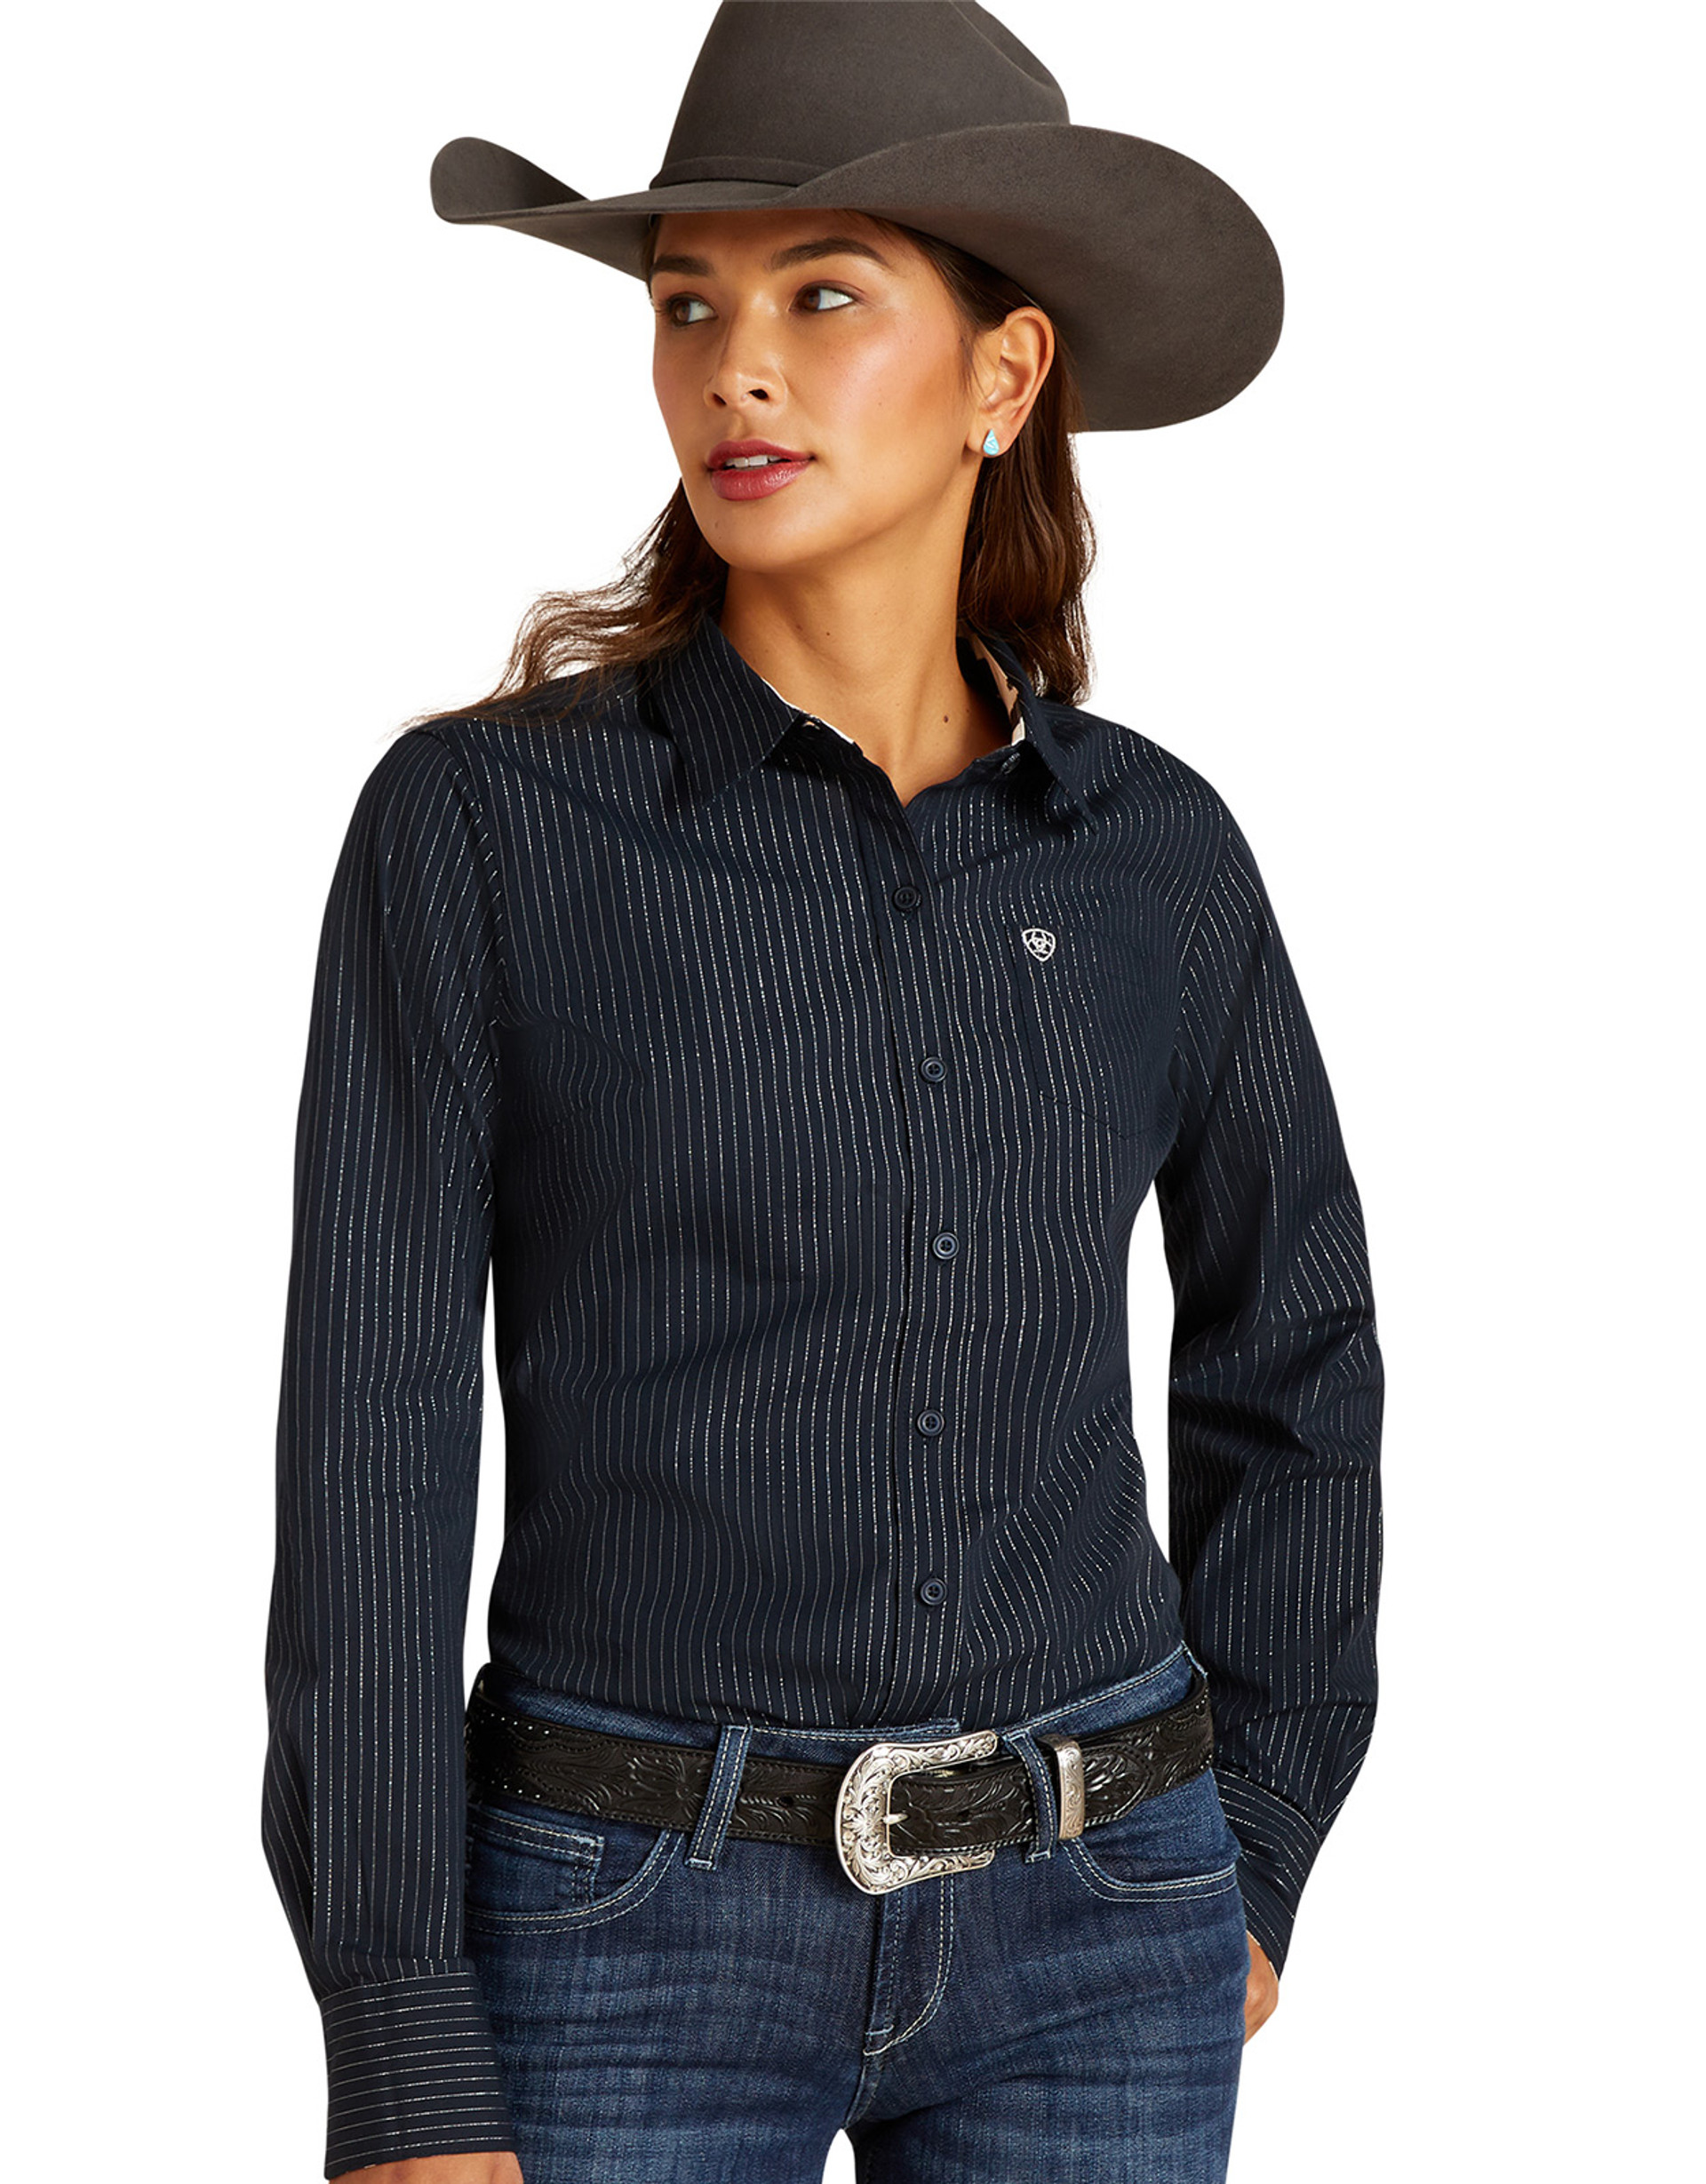 Women's Western Shirts and Tops by Panhandle Slim, Cruel Girl, Rockies ...